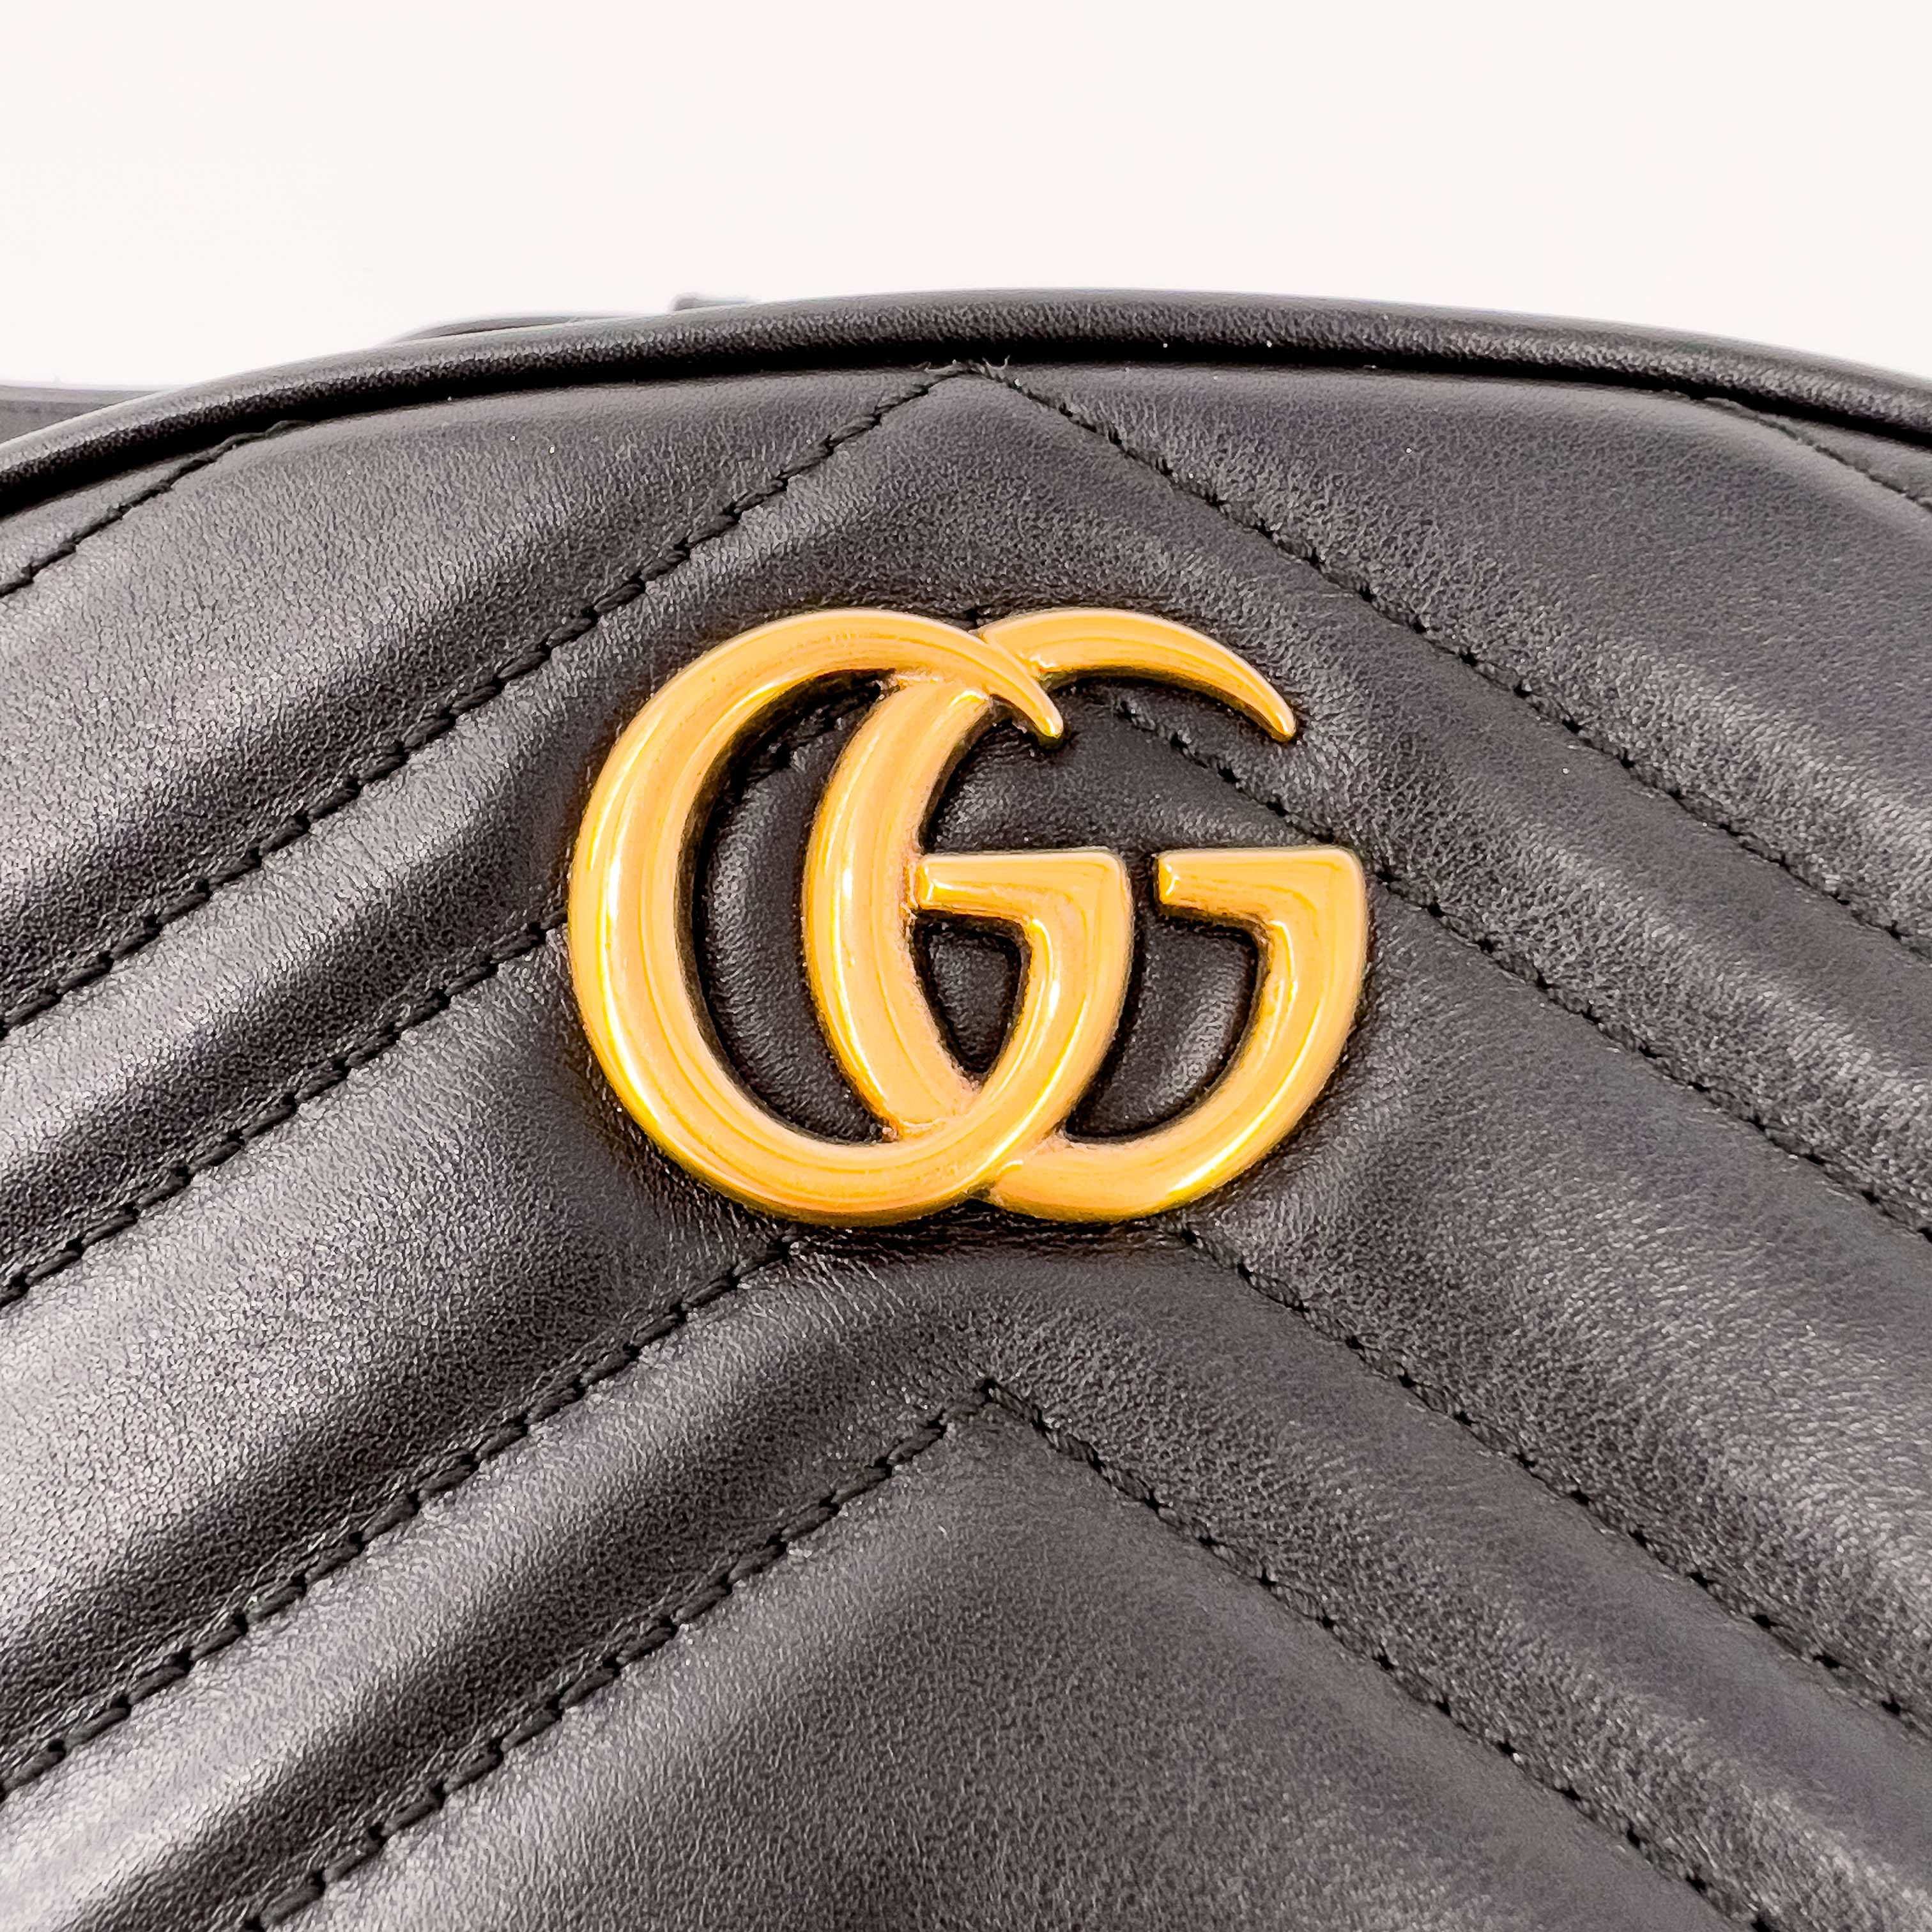 GG Marmont Matelasse Belt Bag